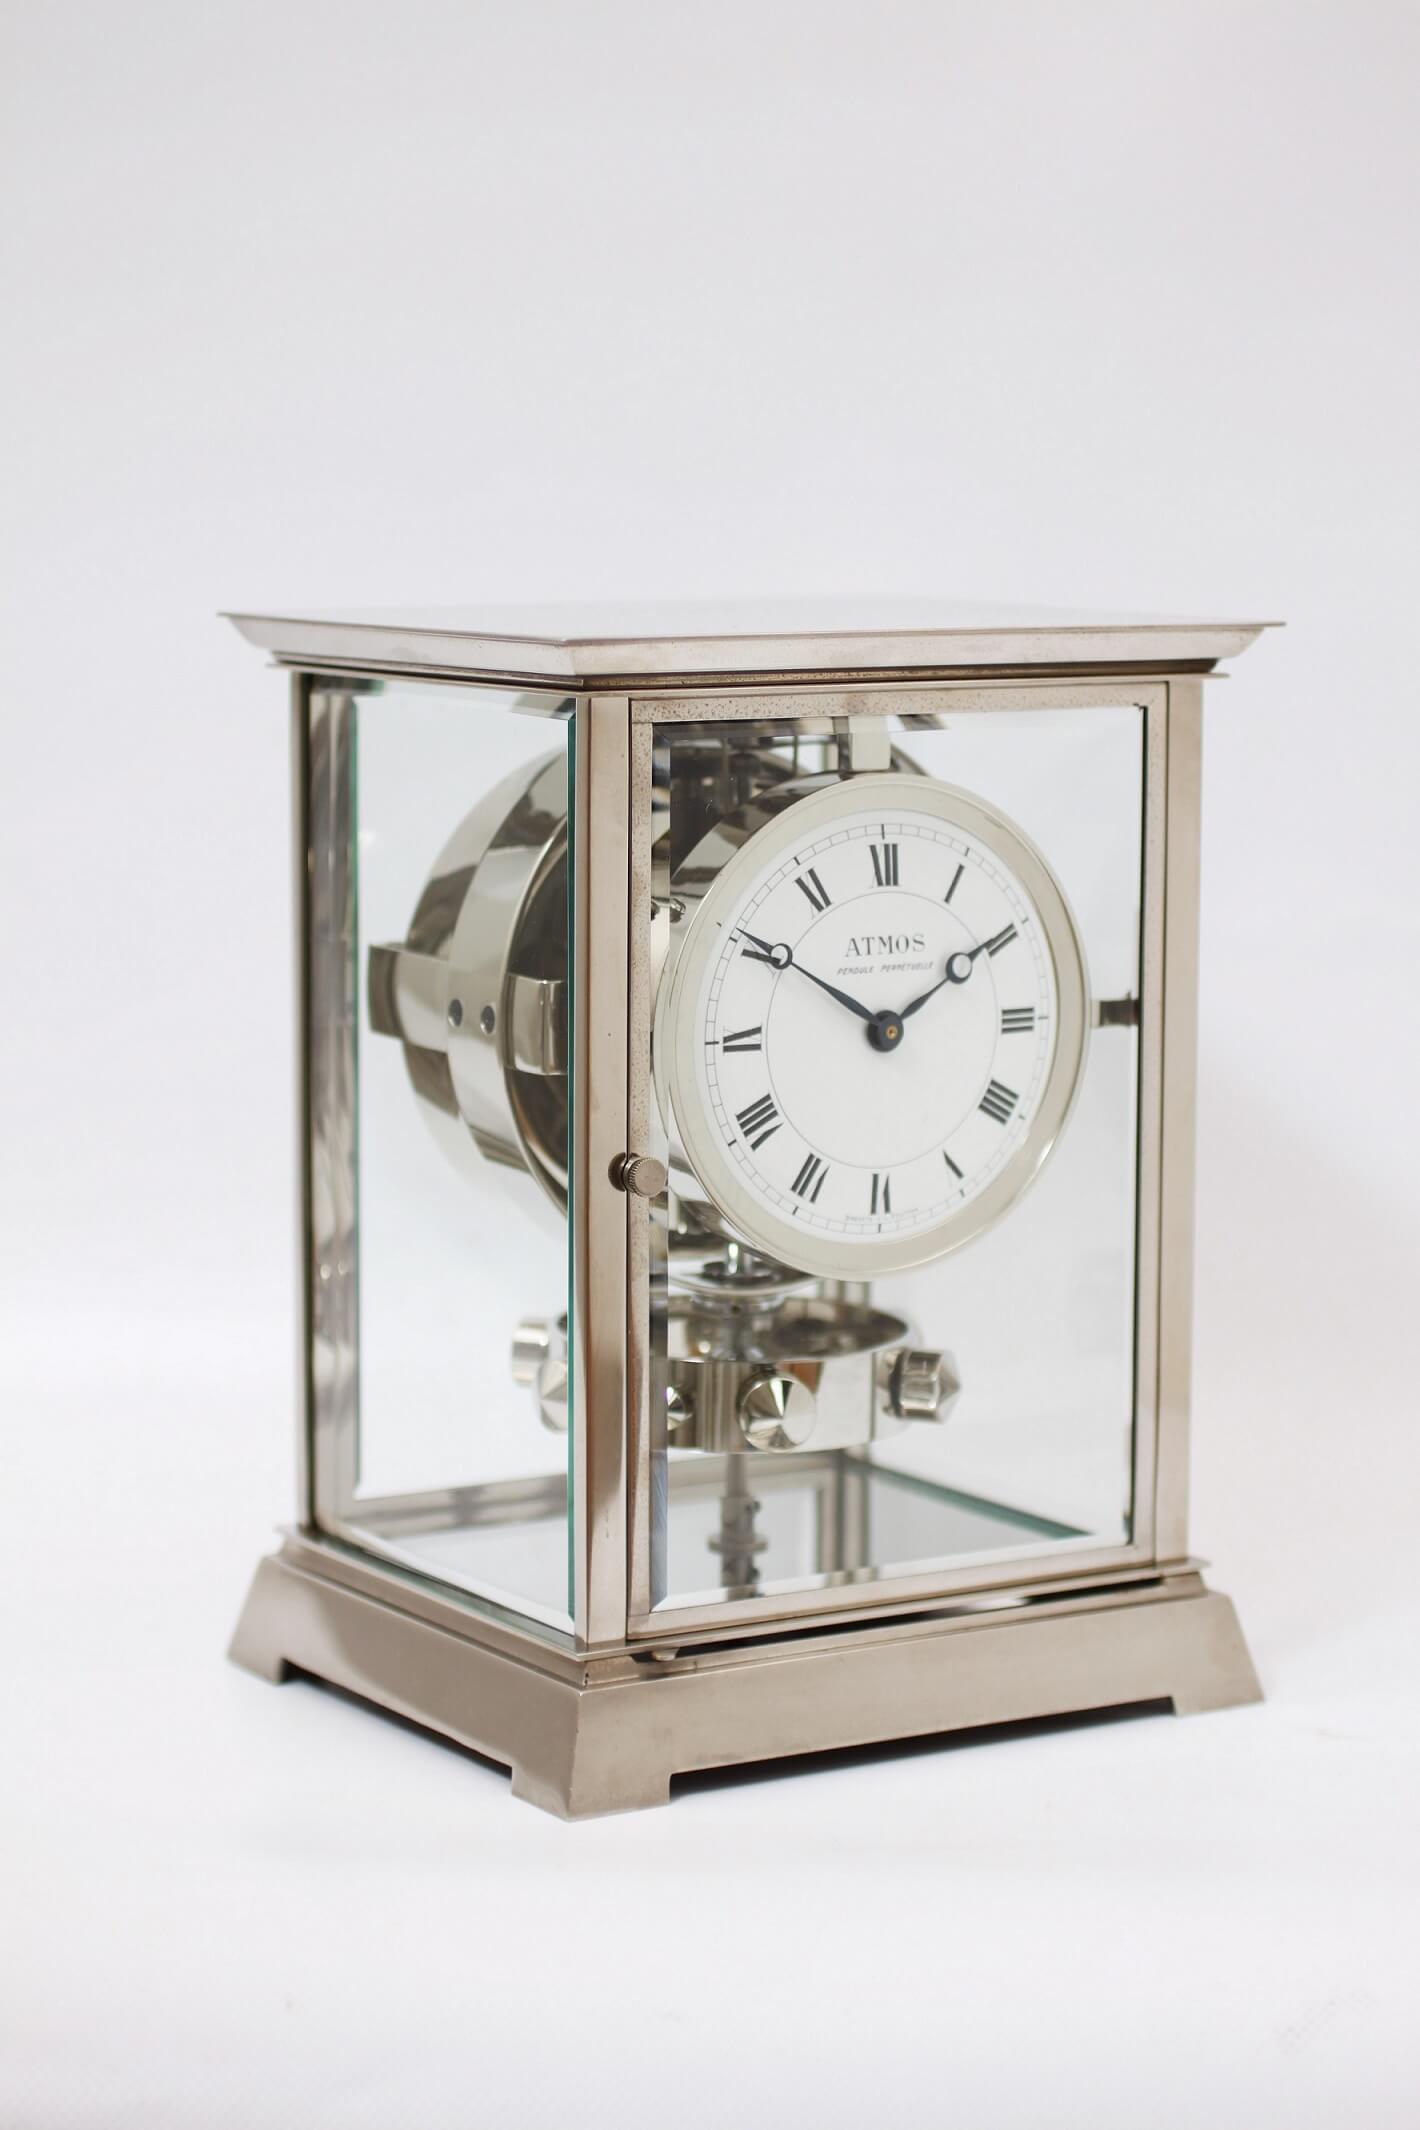 French-Reutter-nickel plated-atmos clock-Jean Louis Reutter-art deco